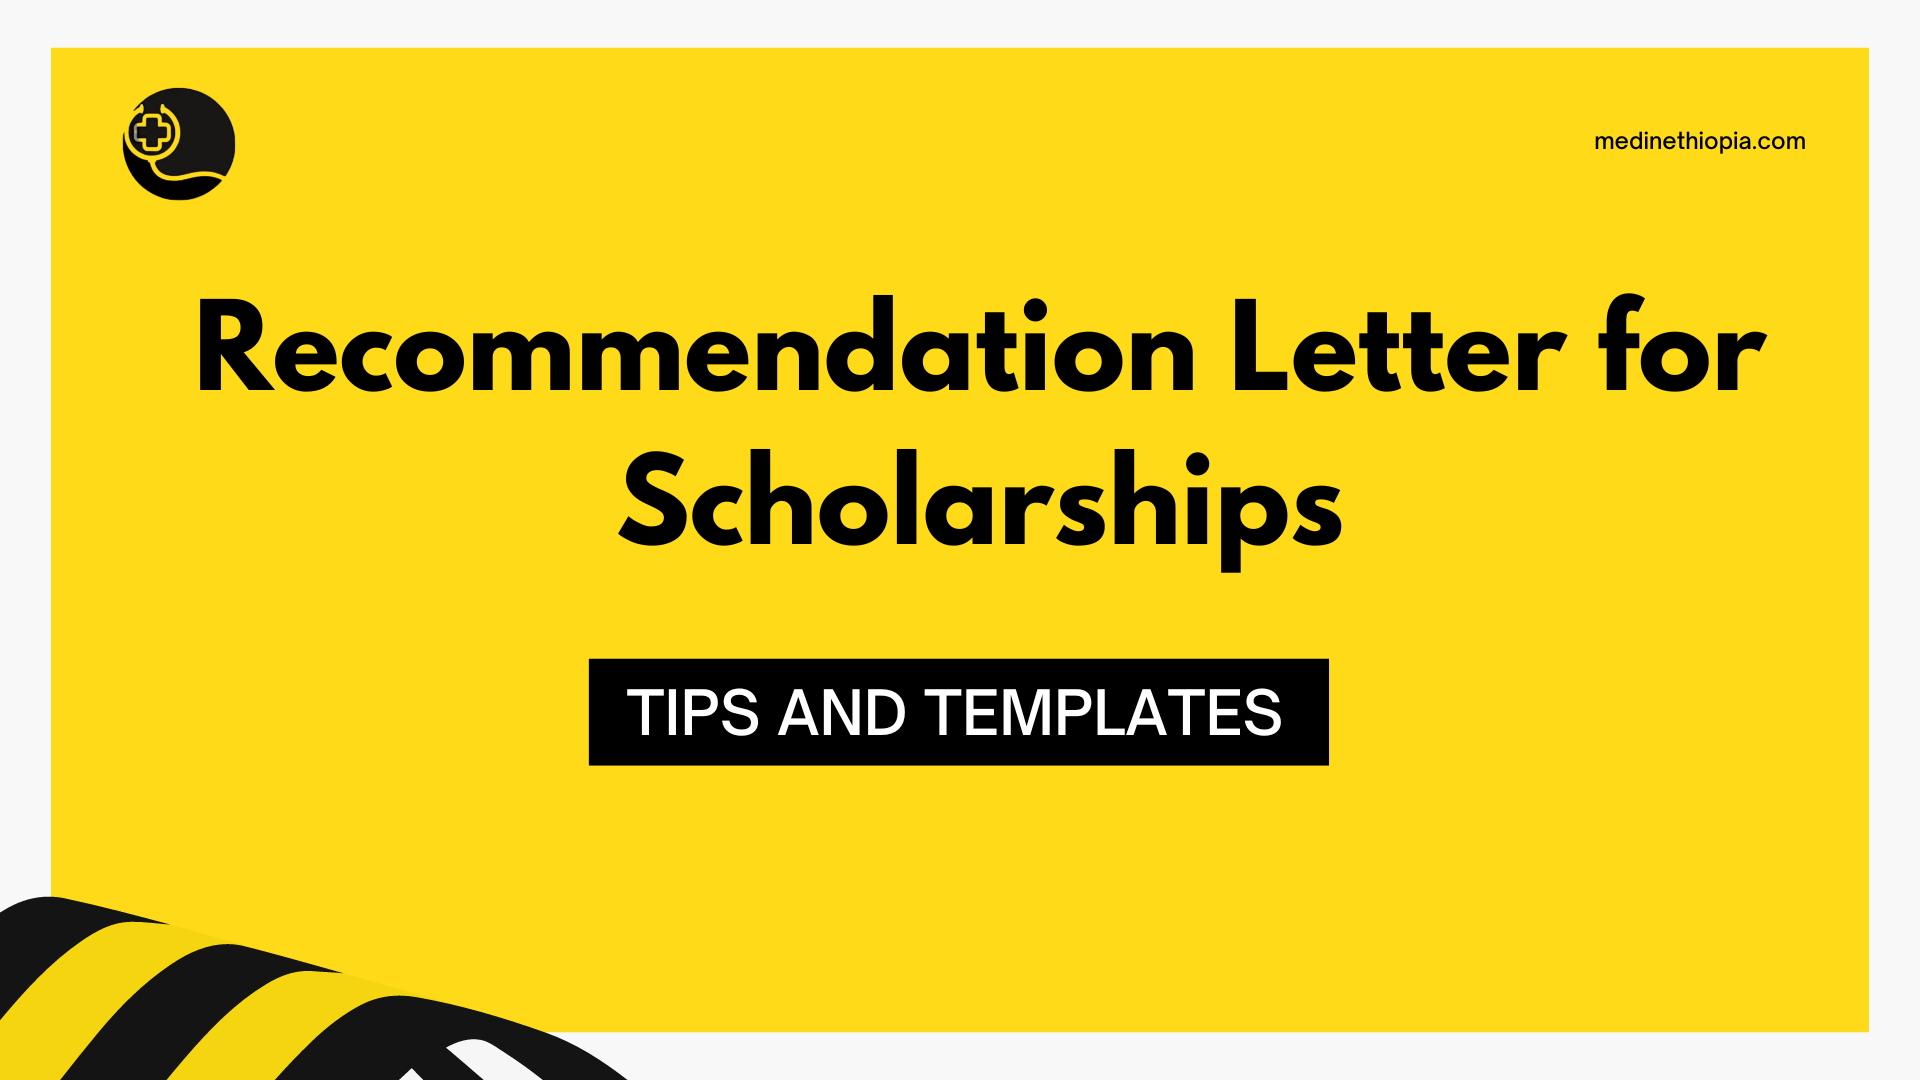 Recommendation Letter for Scholarships